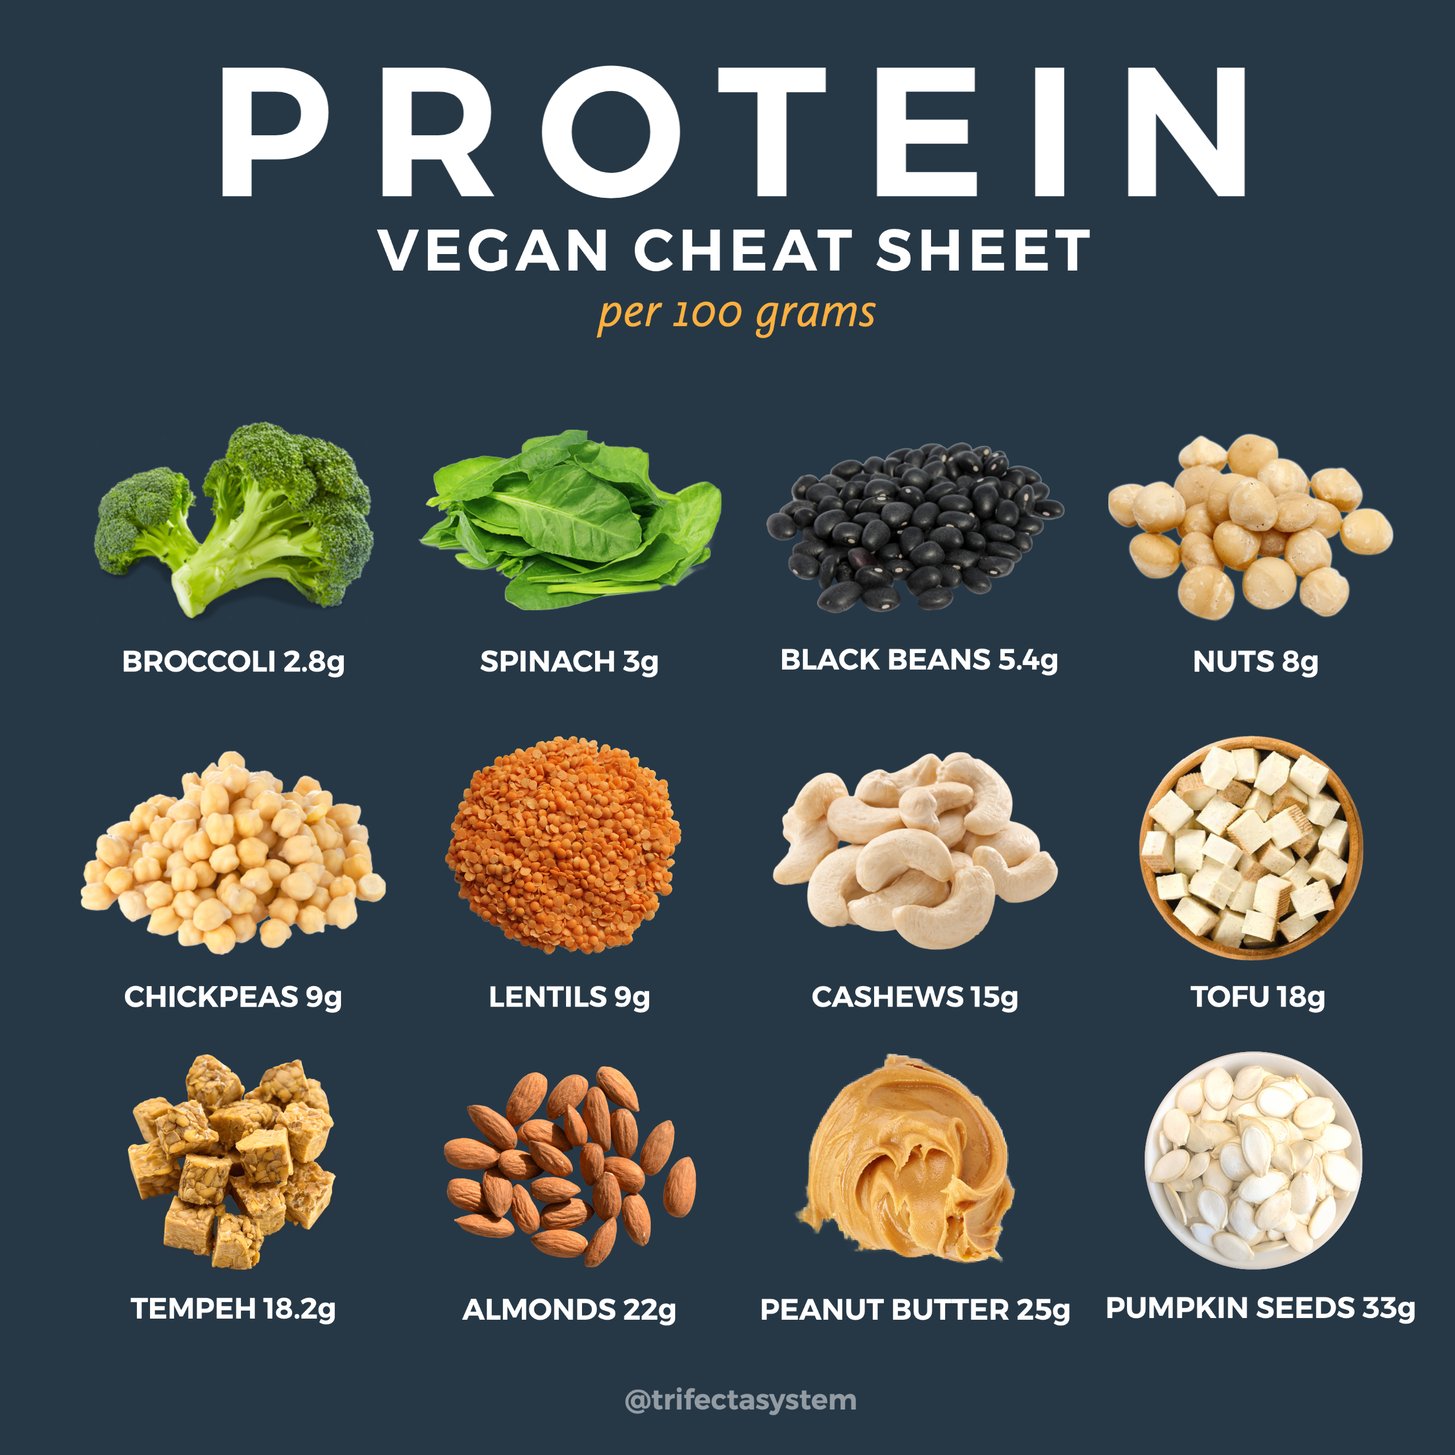 Vegetarian Protein Combinations Chart